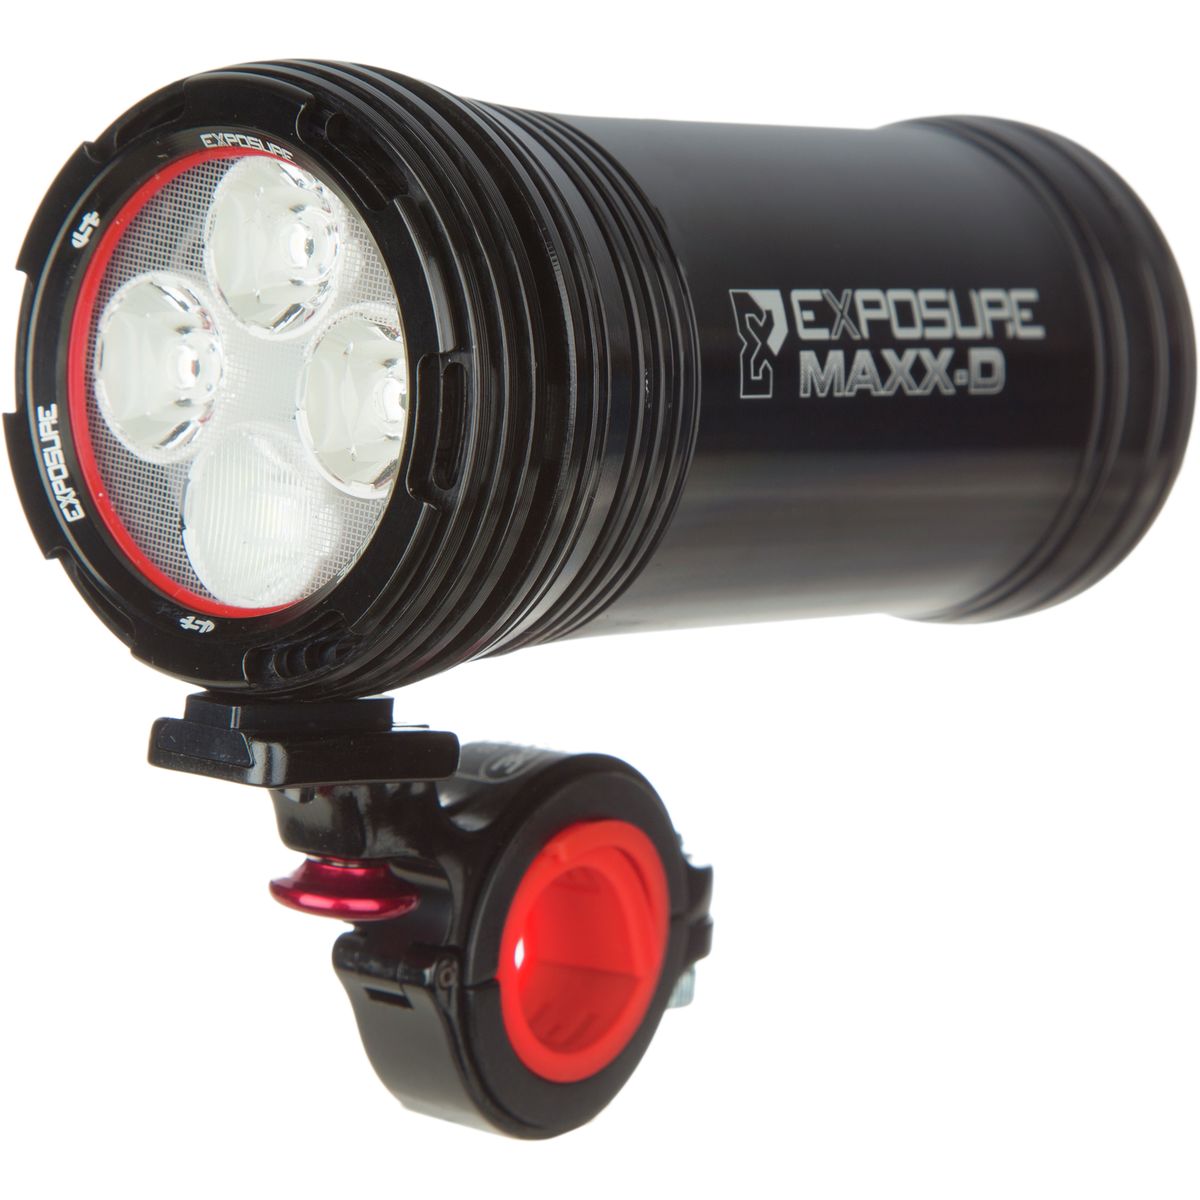 Exposure Maxx D Mk9 Headlight